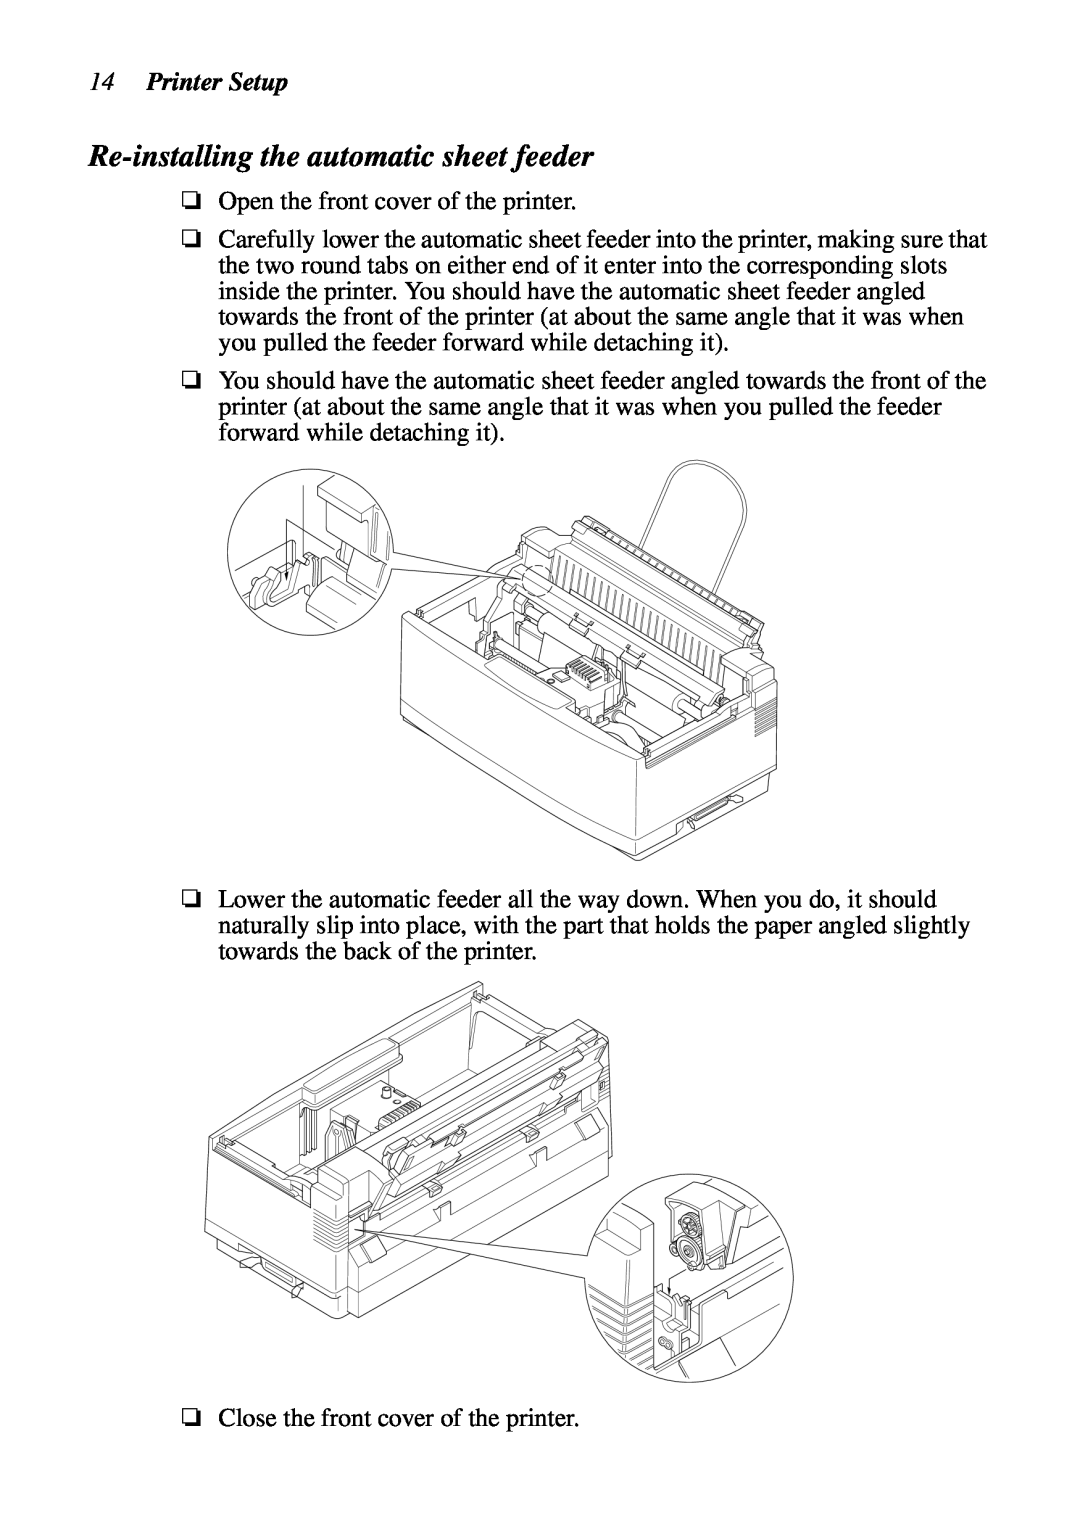 Star Micronics NX-2460C user manual Re-installing the automatic sheet feeder, Printer Setup 